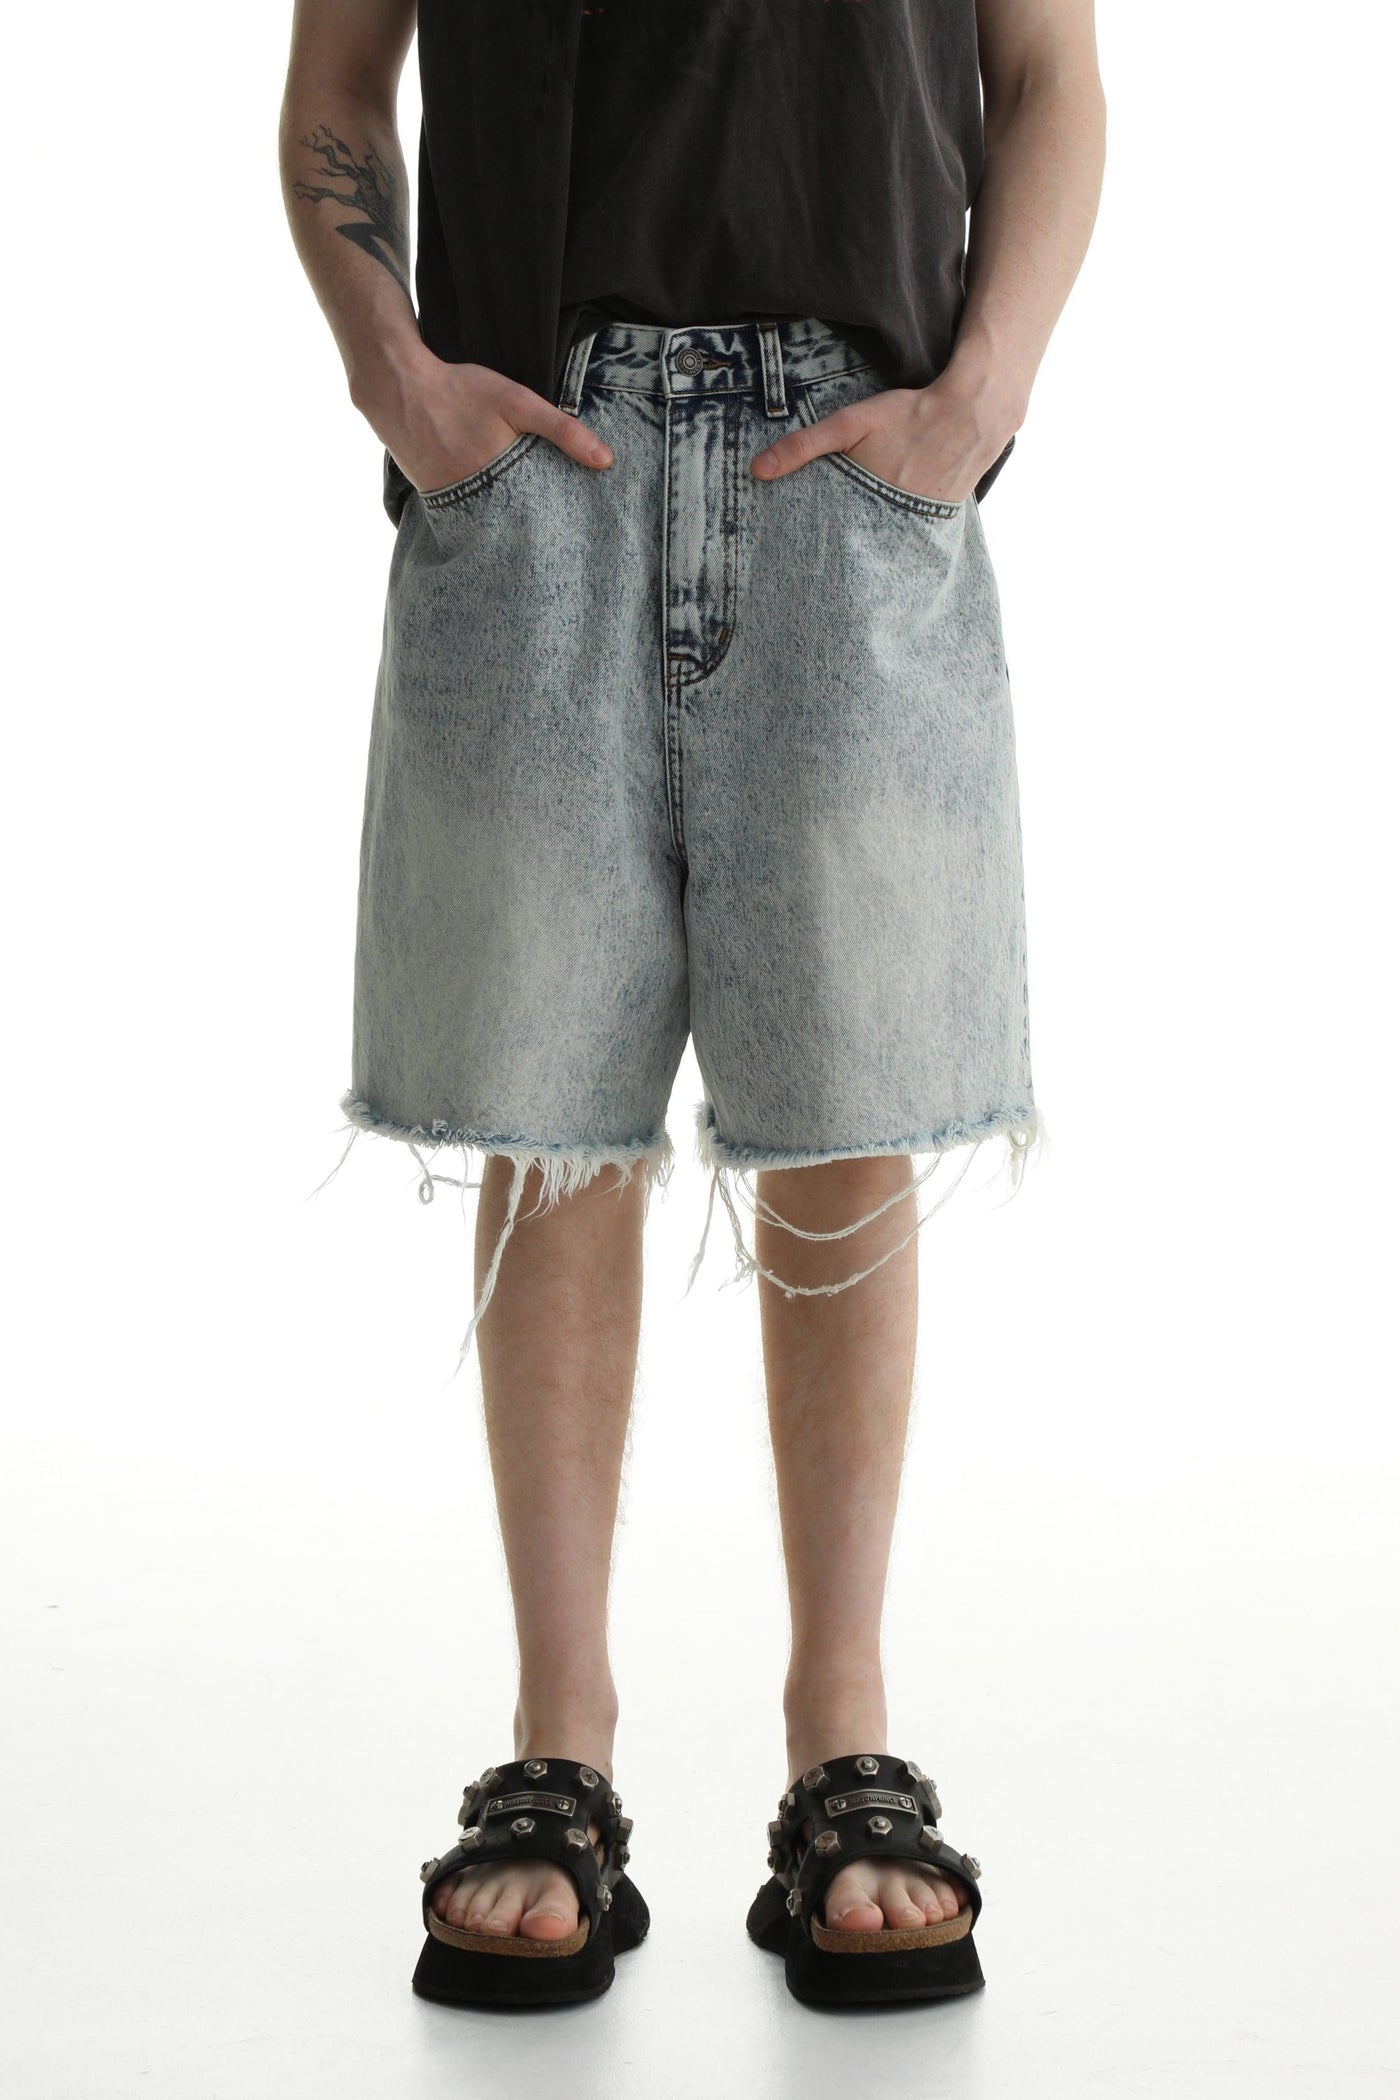 Faded Raw Edge Denim Shorts & Jeans Set Korean Street Fashion Clothing Set By Mason Prince Shop Online at OH Vault